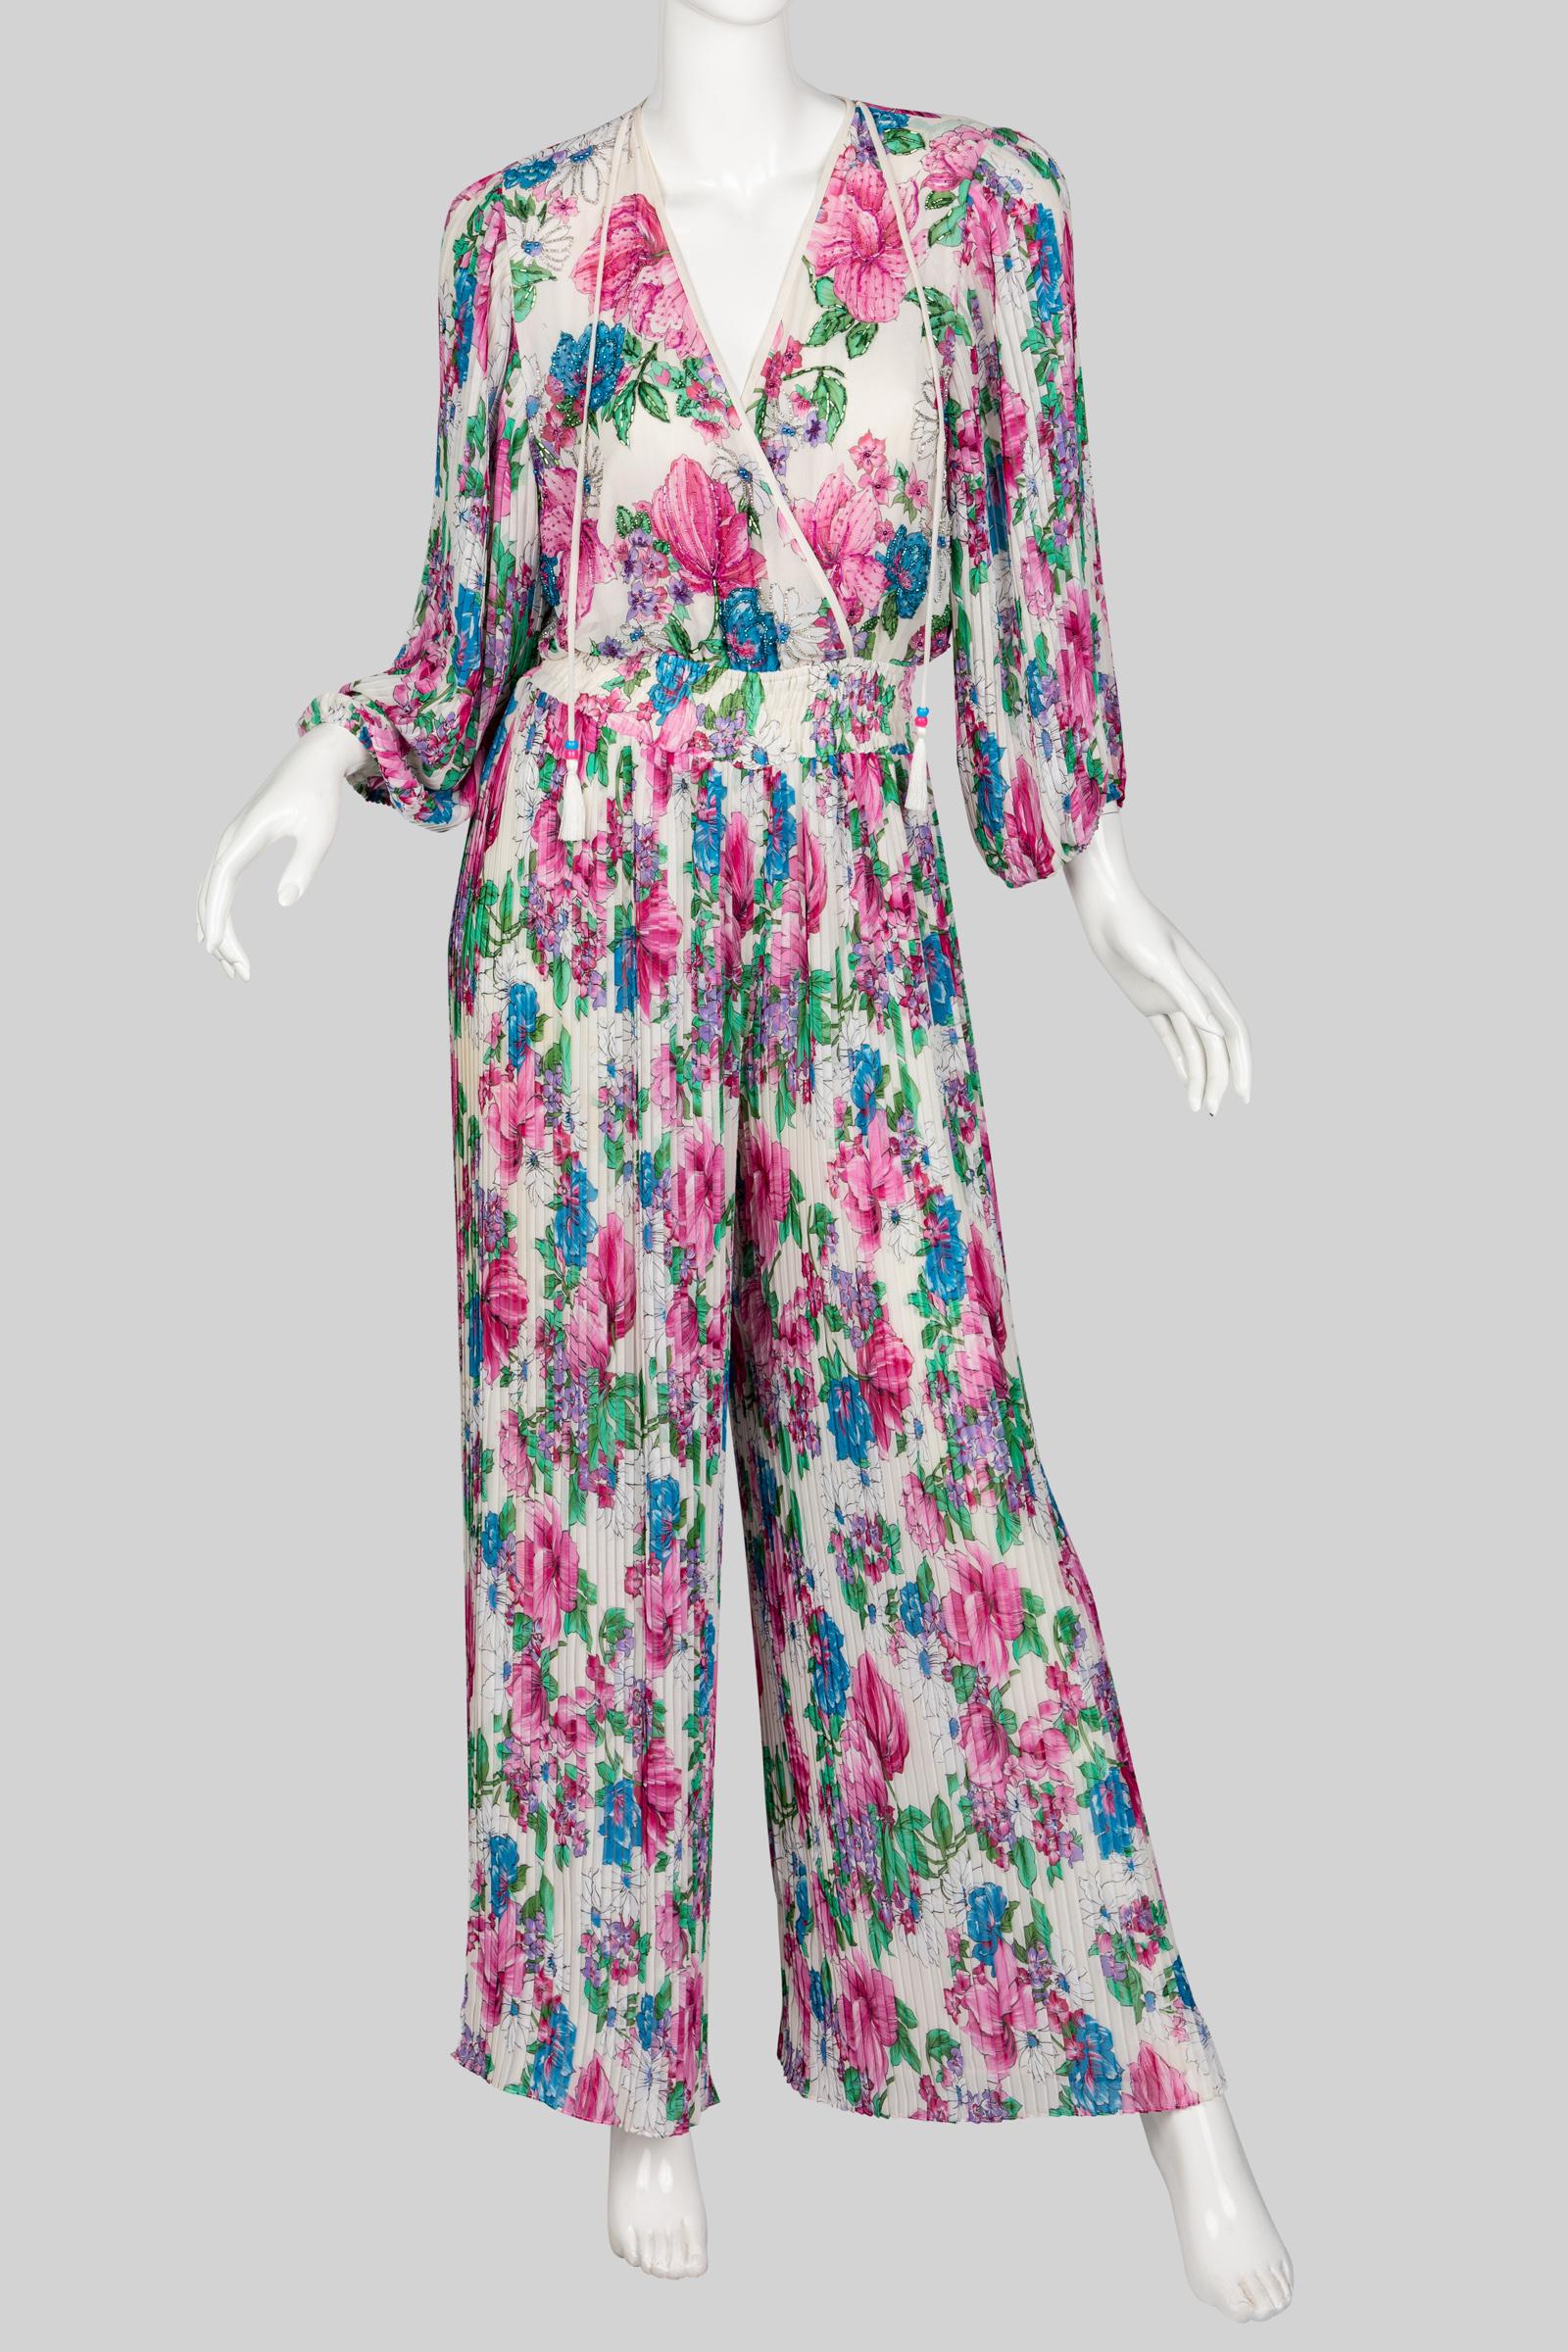  Diane Freis Floral Chiffon Jumpsuit, 1980s In Excellent Condition For Sale In Boca Raton, FL